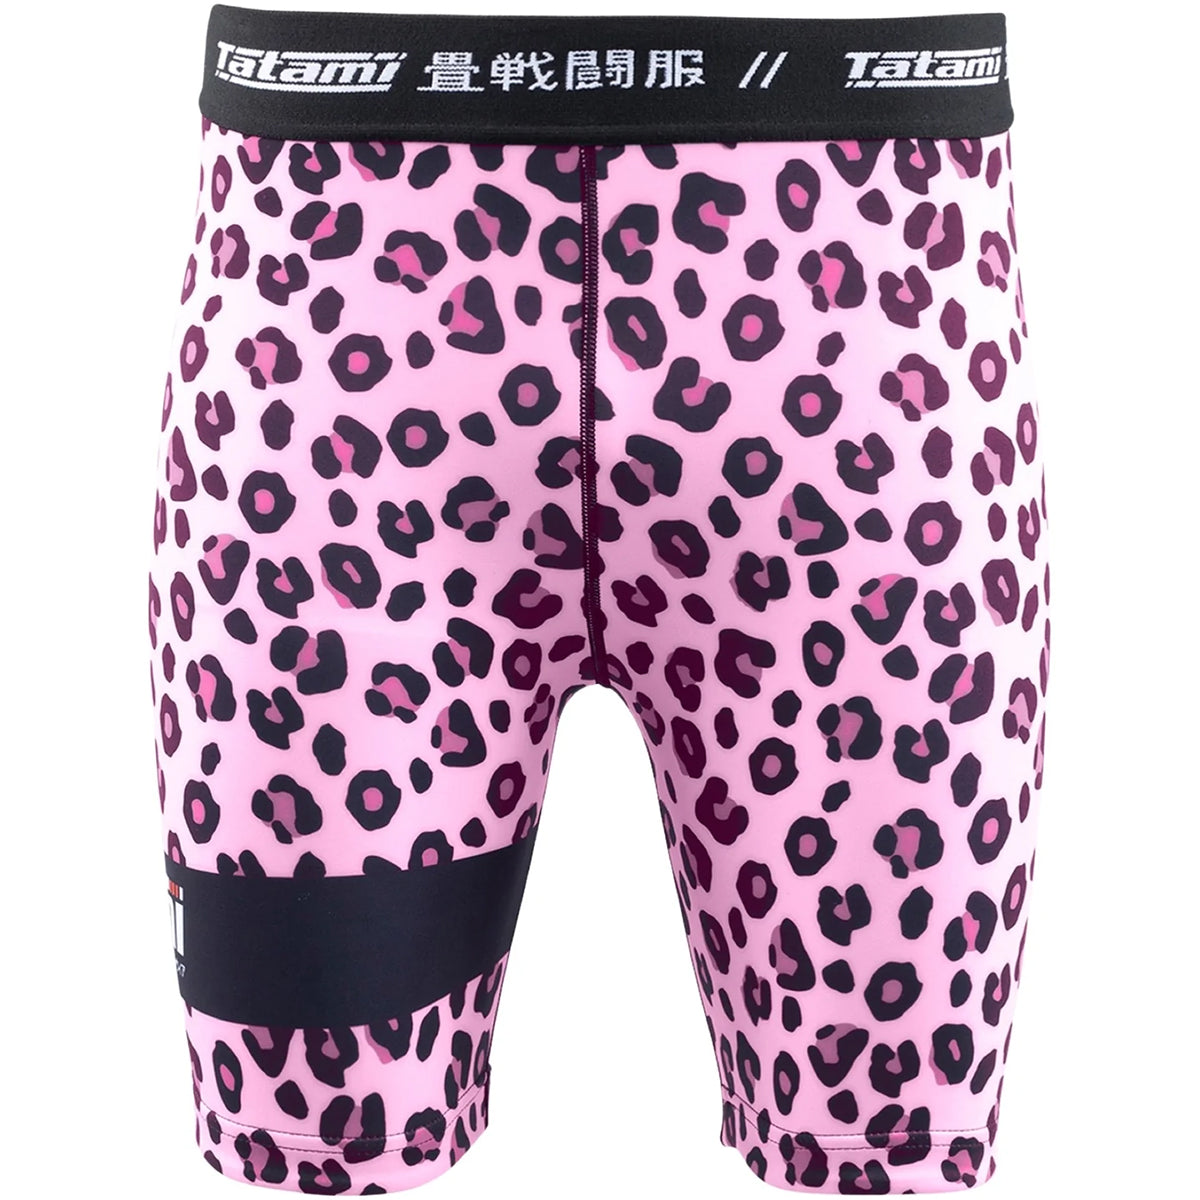 Tatami Fightwear Recharge Vale Tudo Shorts - Pink Leopard Tatami Fightwear